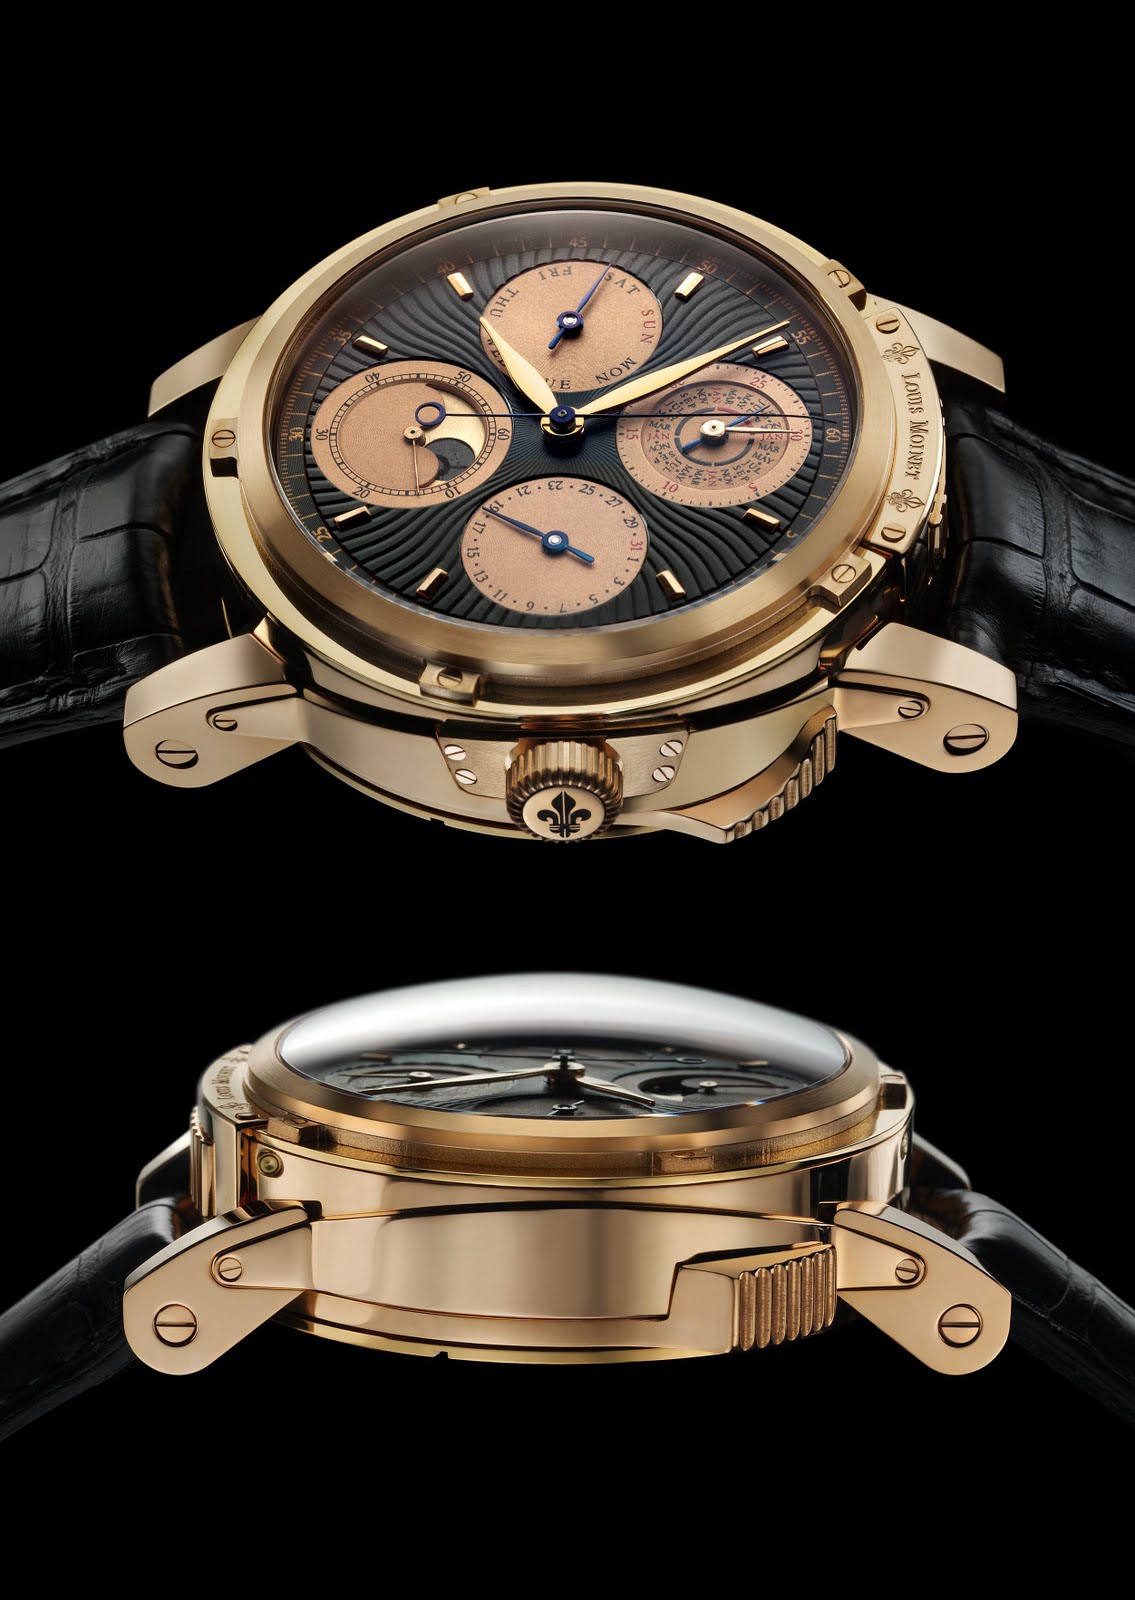 Louis Moinet Magistralis luxury watch